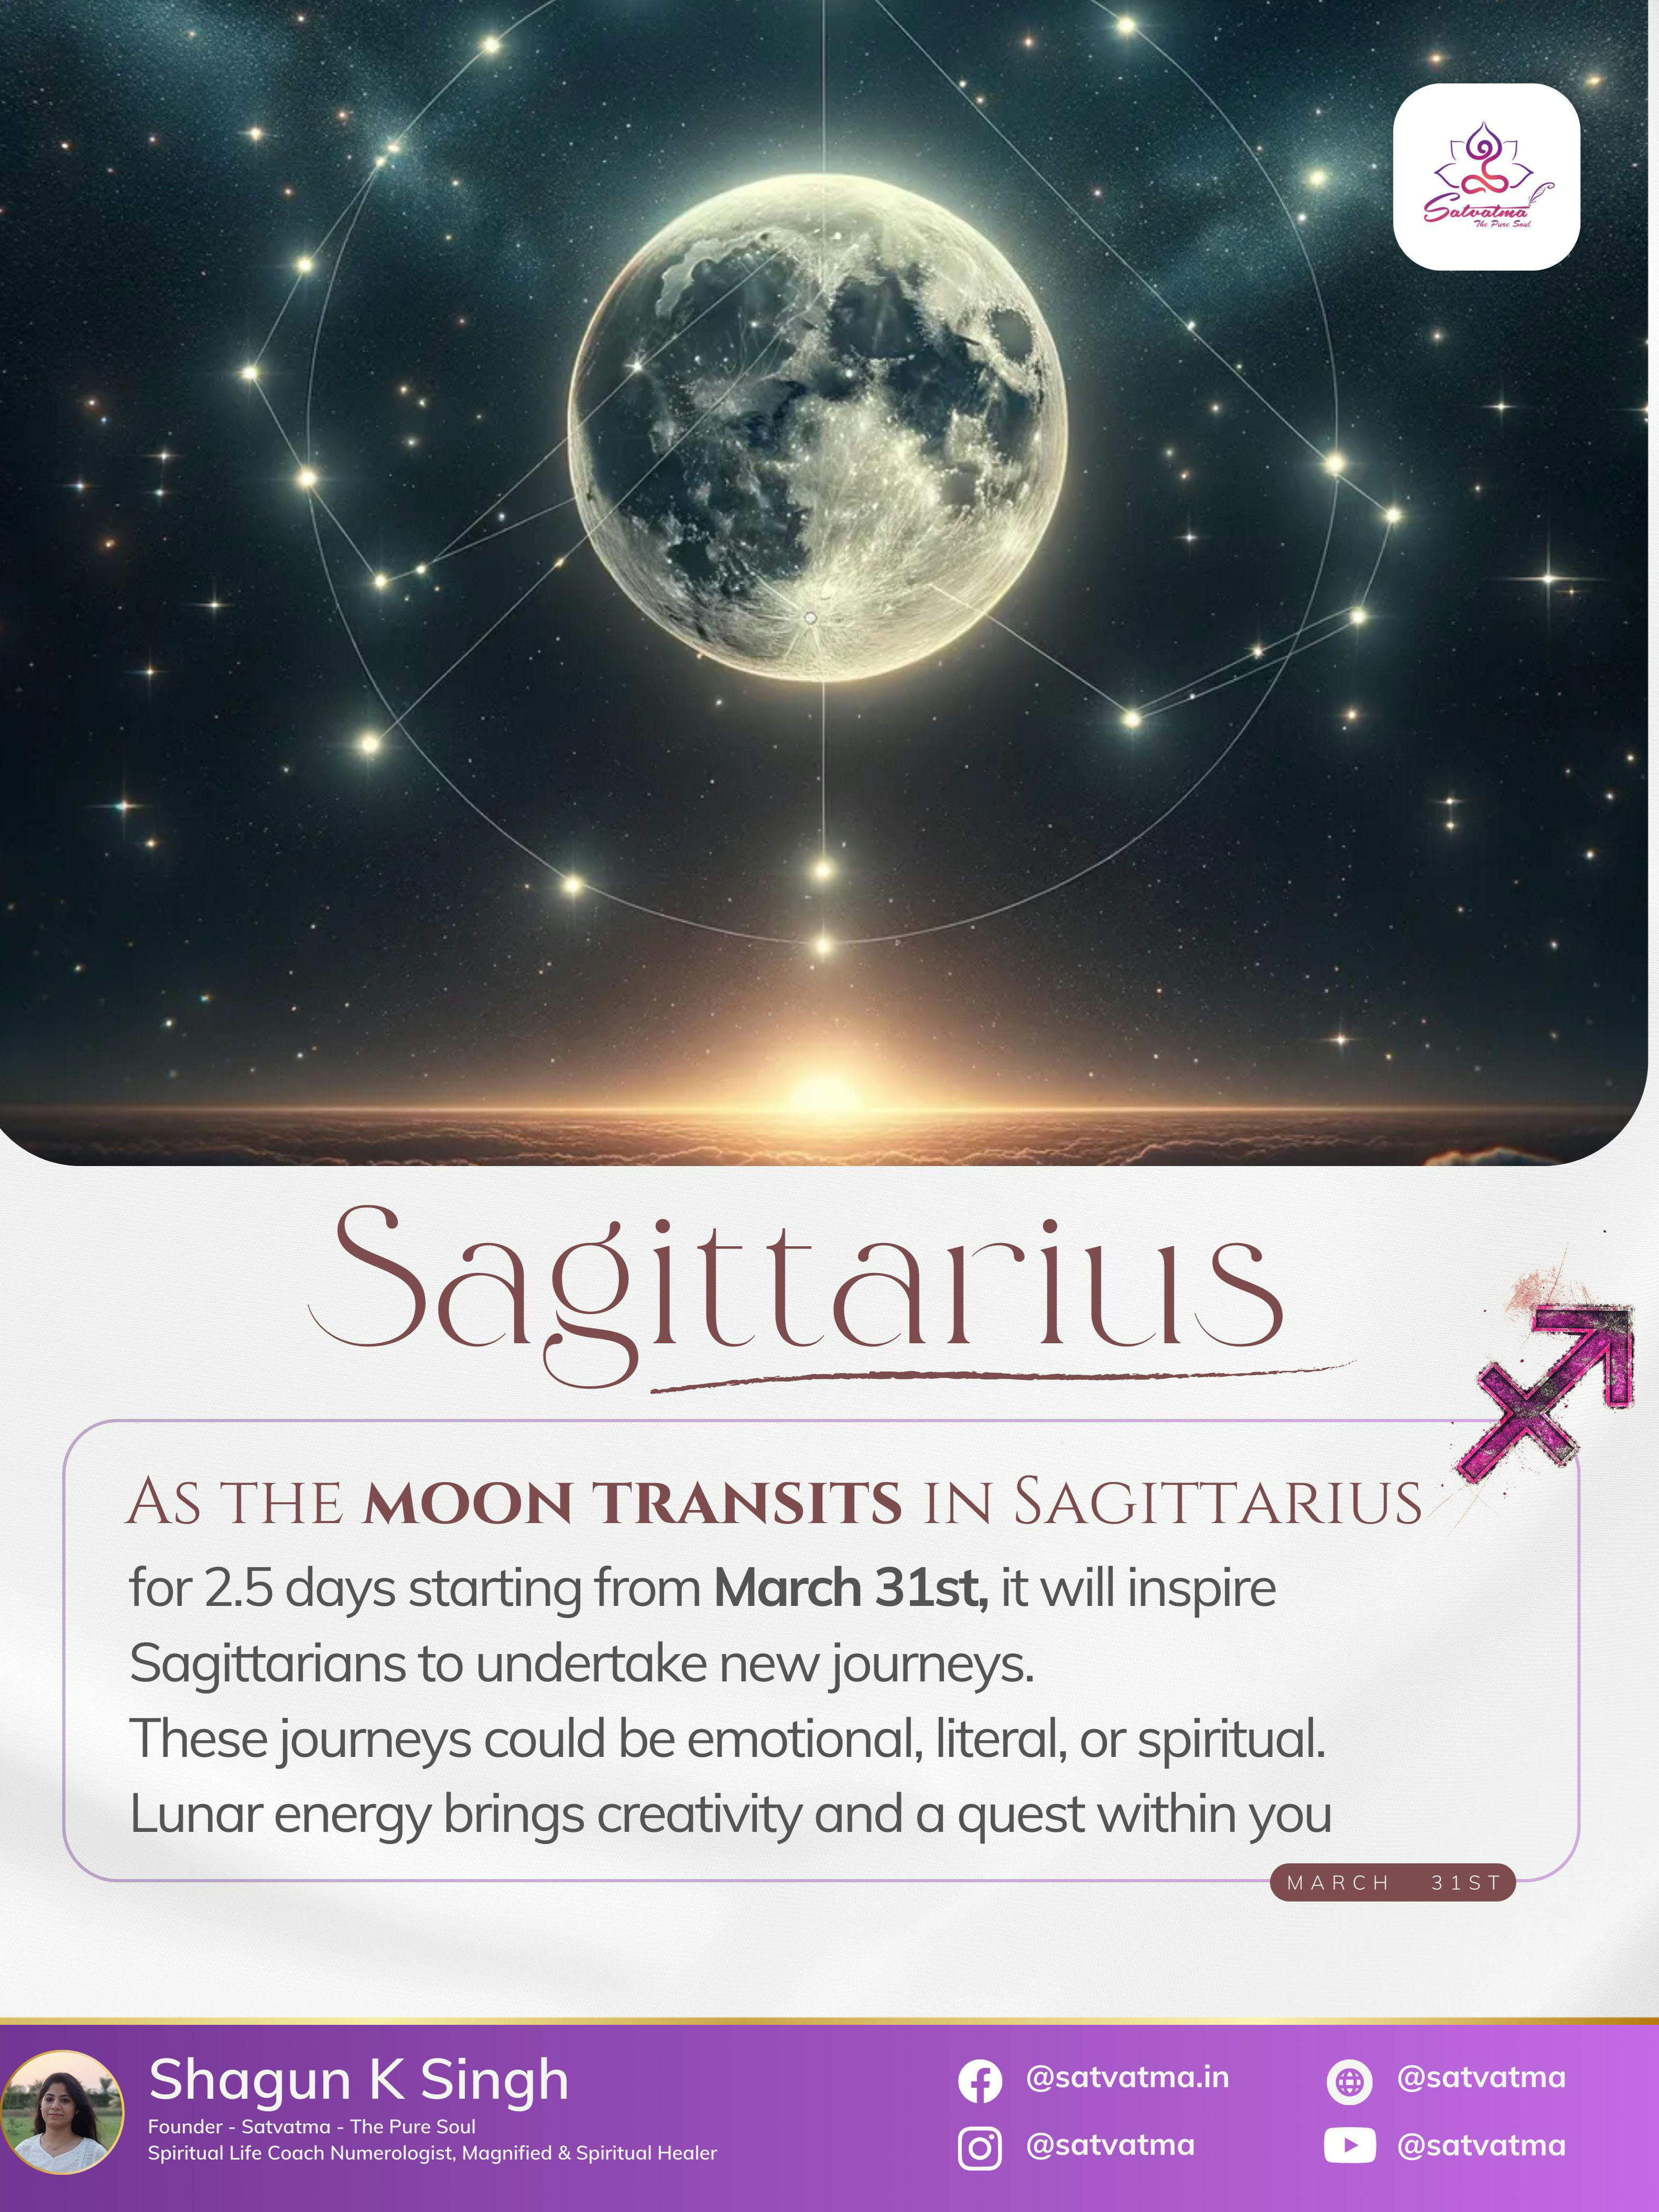 How the transit of Moon into Sagittarius sign brings energy for Saggis...

Love & Light 
Shagun K Singh
Satvatma-The Pure Soul
Manifesting Miracles

# # # 